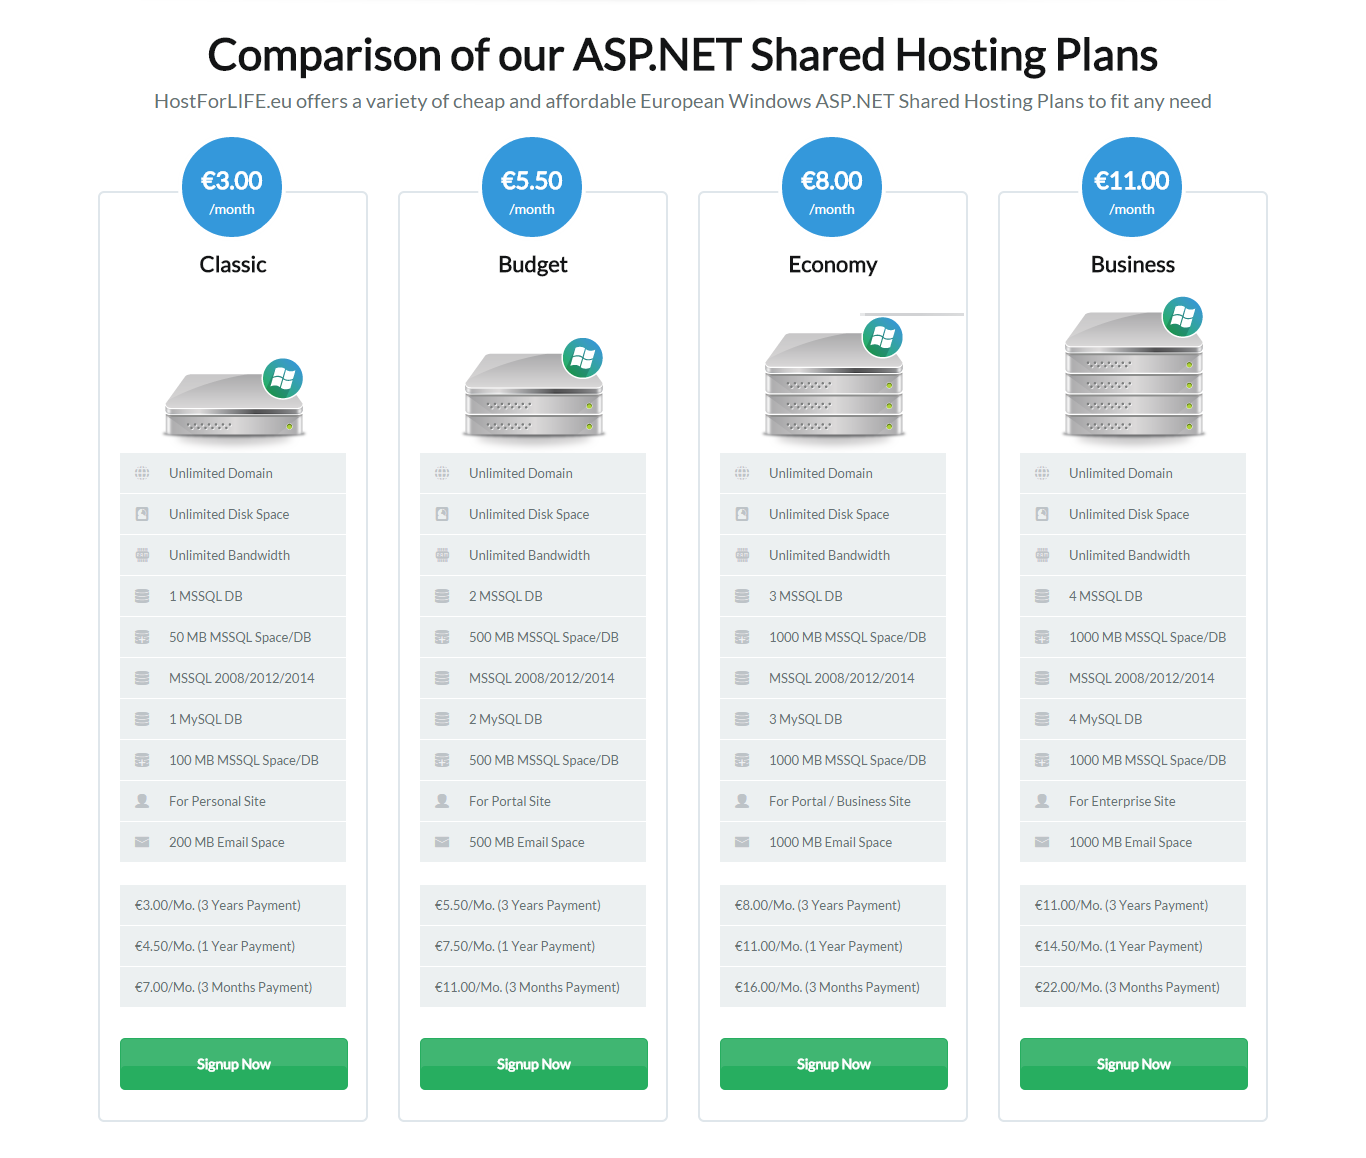 hostforlife-eu-ASPNET-Shared-European-Hosting-Plans